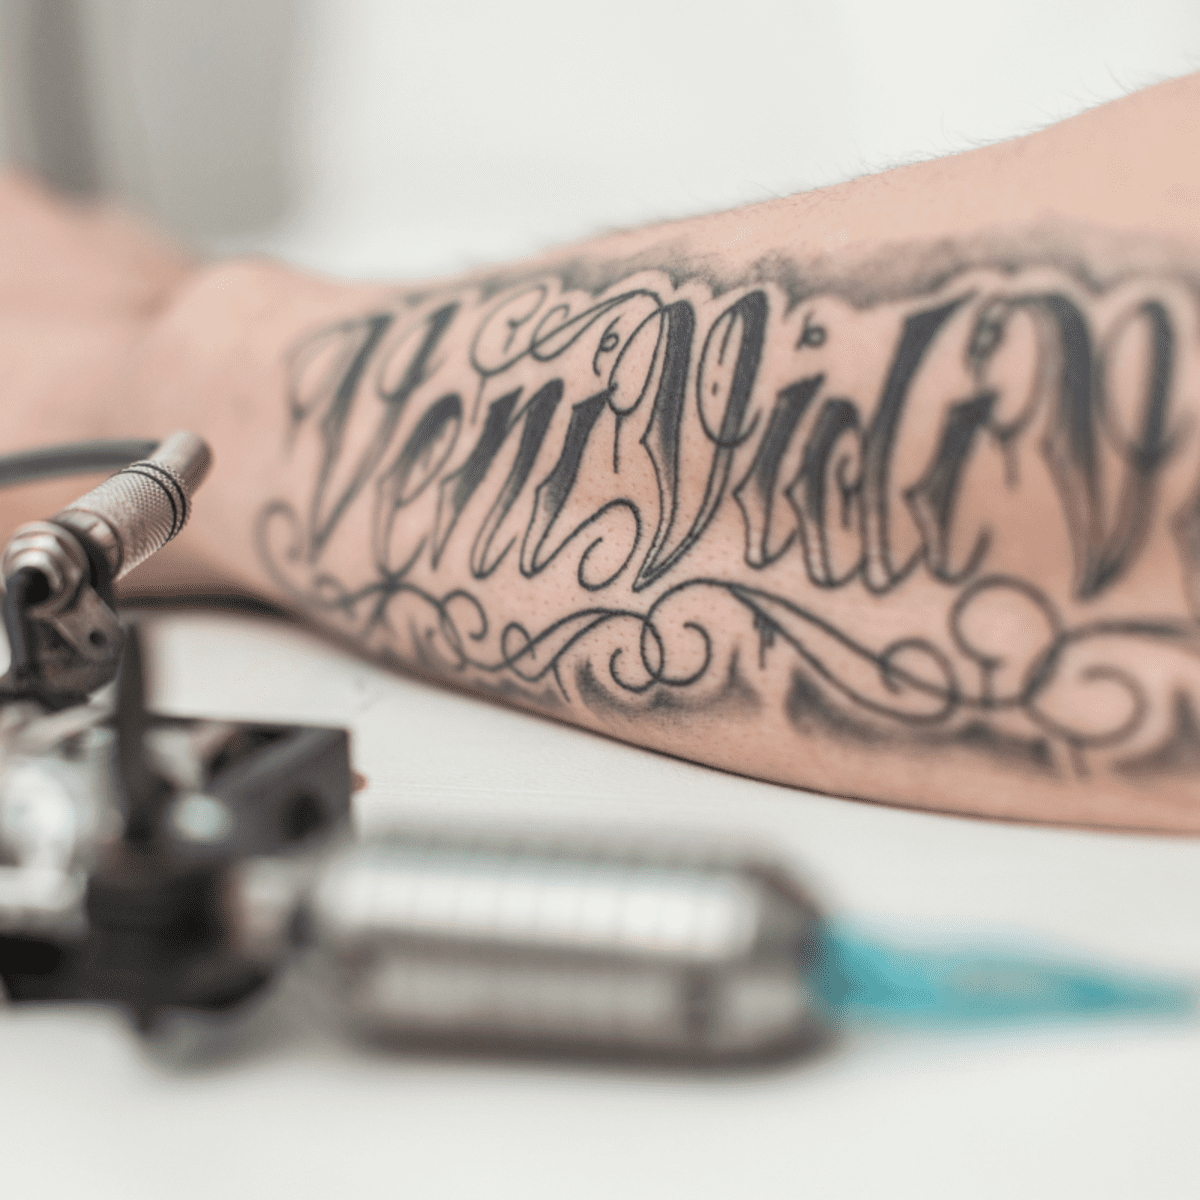 How Much Will My Tattoo Cost? - TatRing